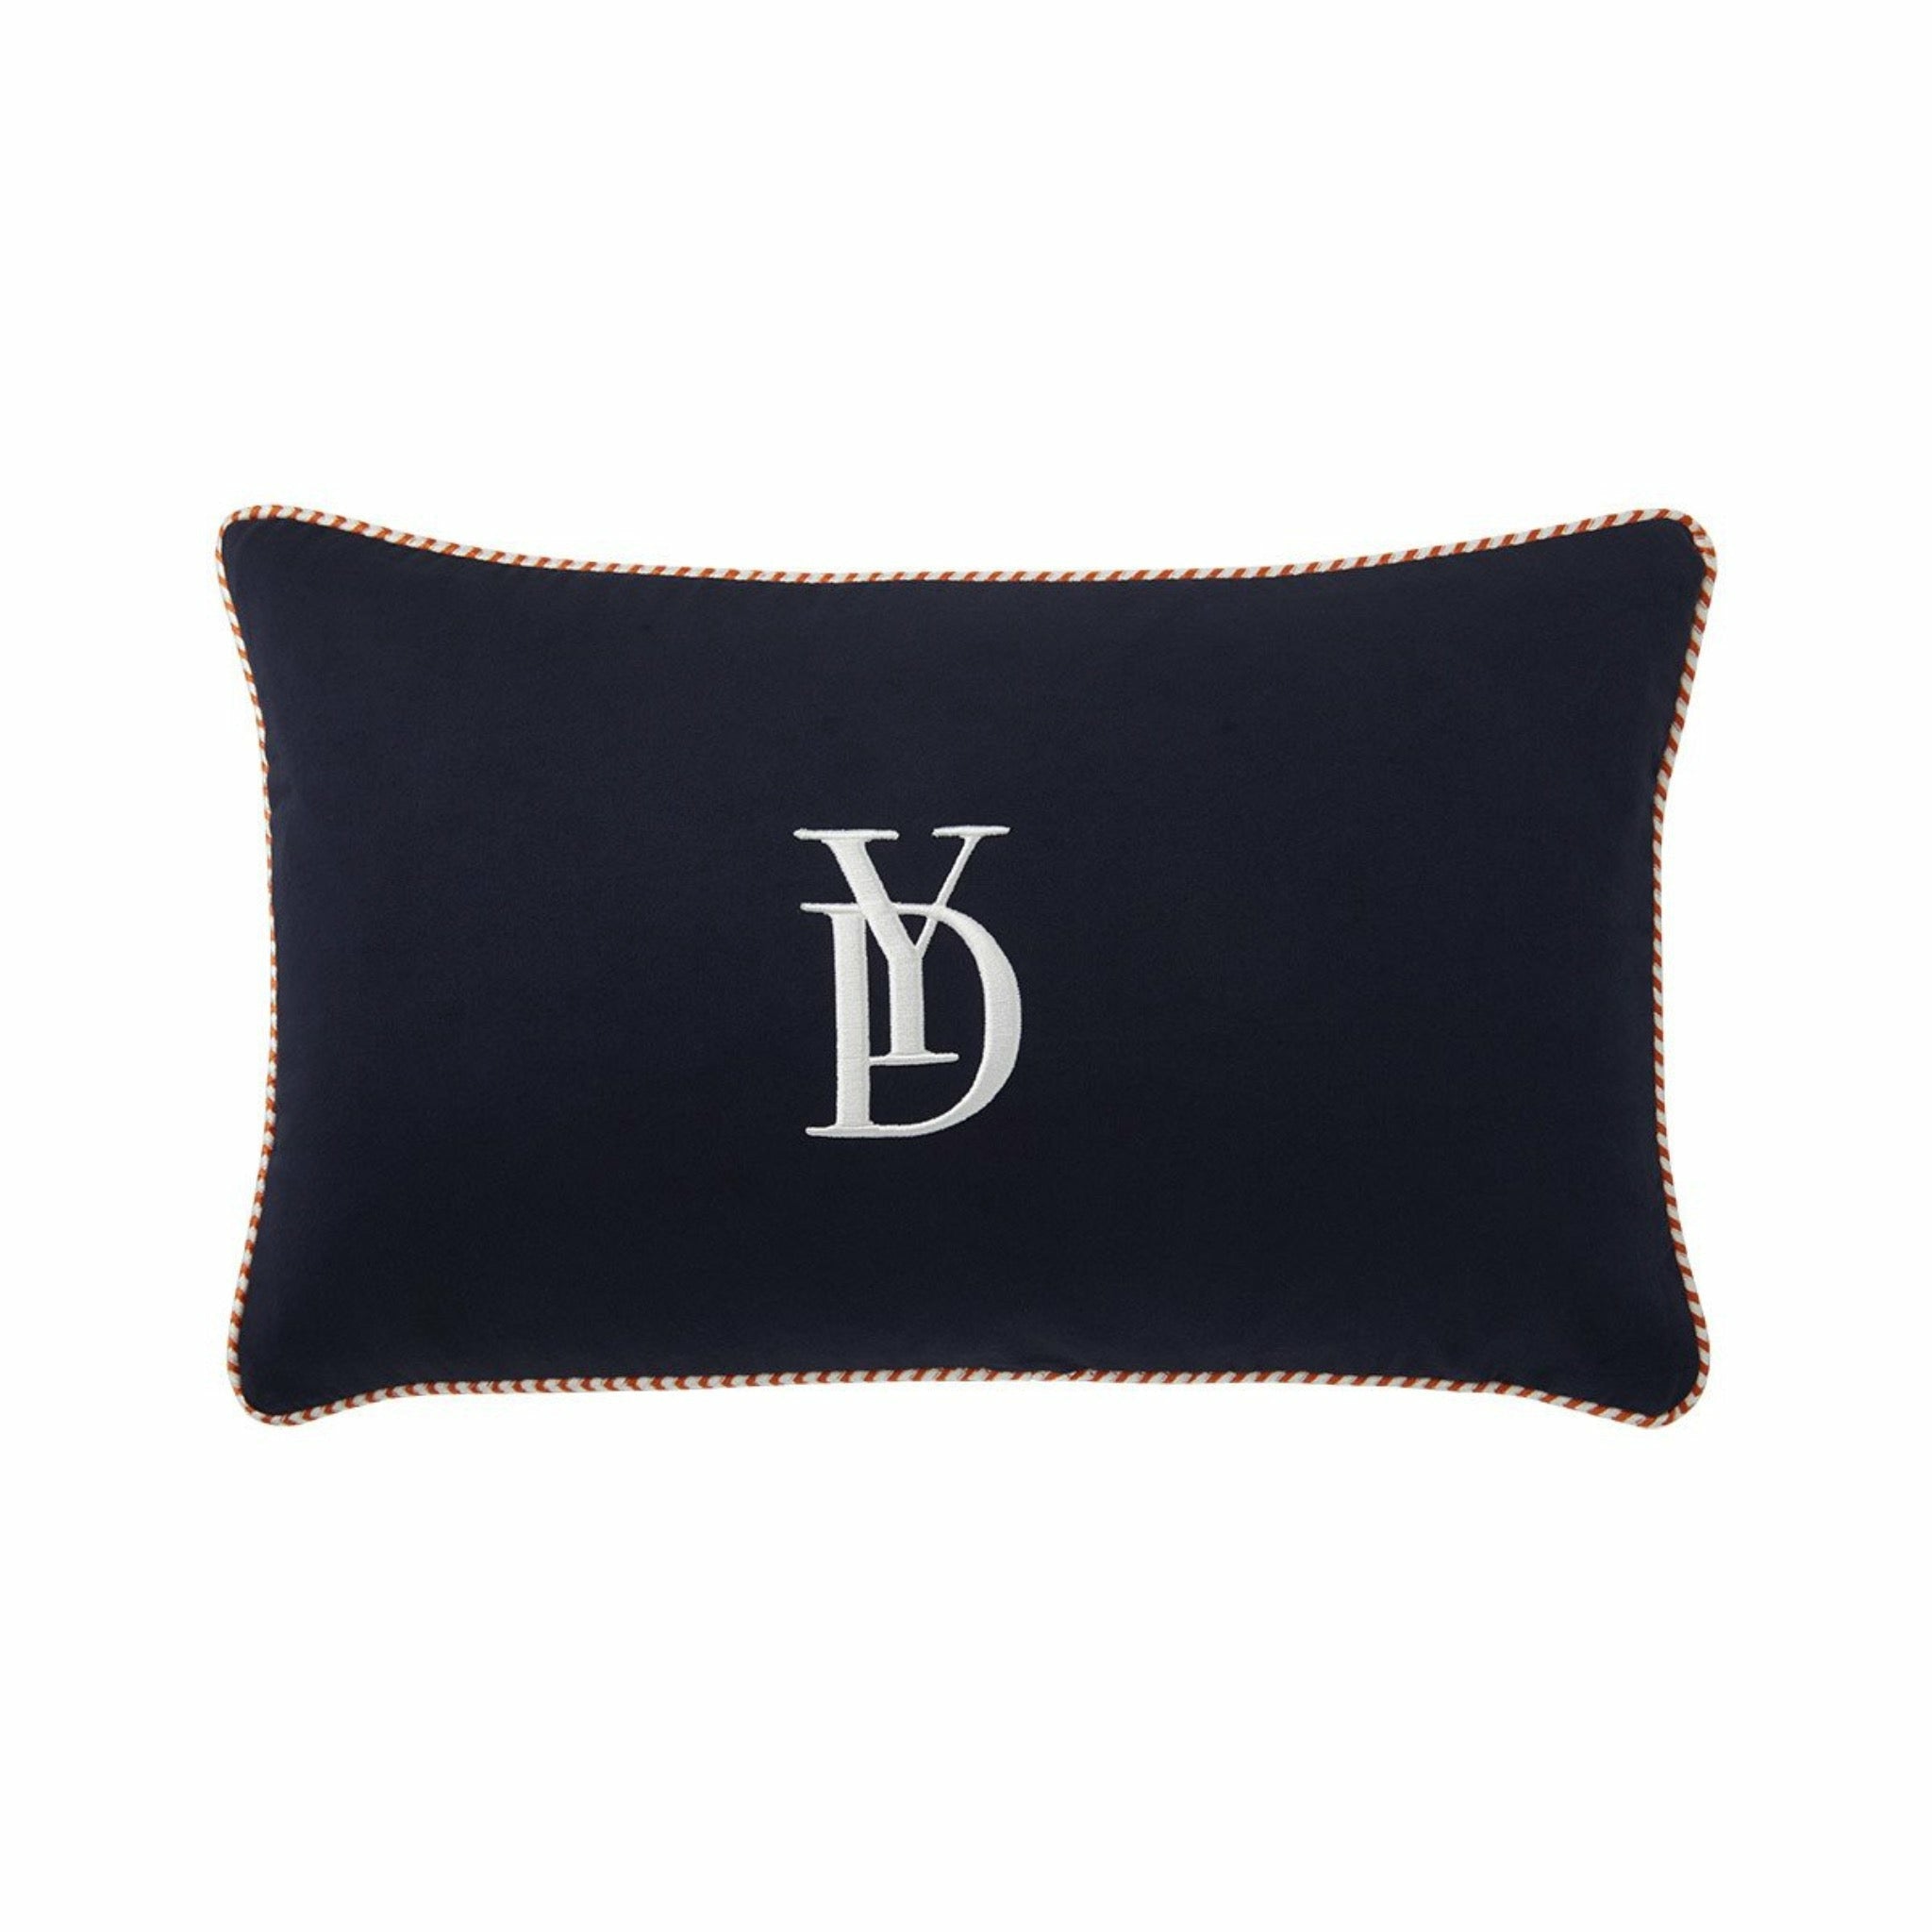 Louis Vuitton Decorative Pillows